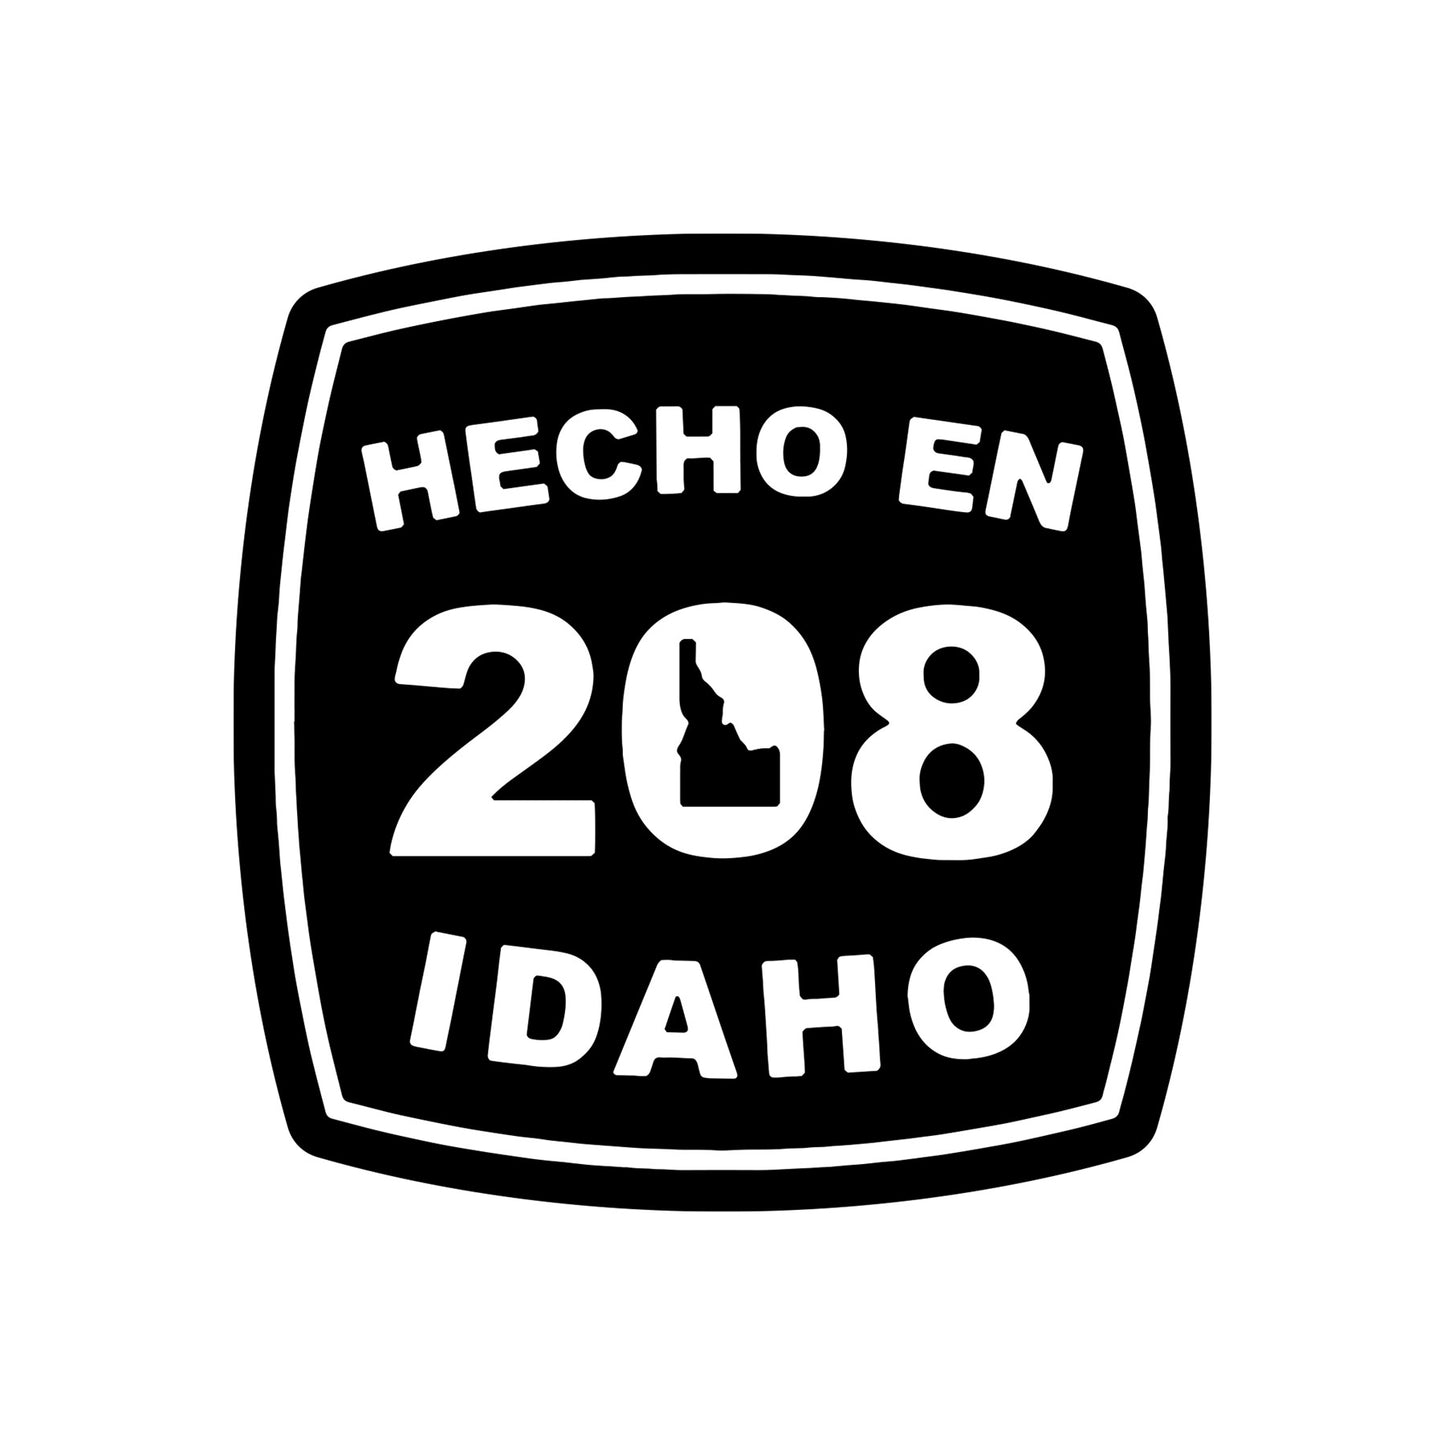 Hecho En Idaho Vinyl Sticker